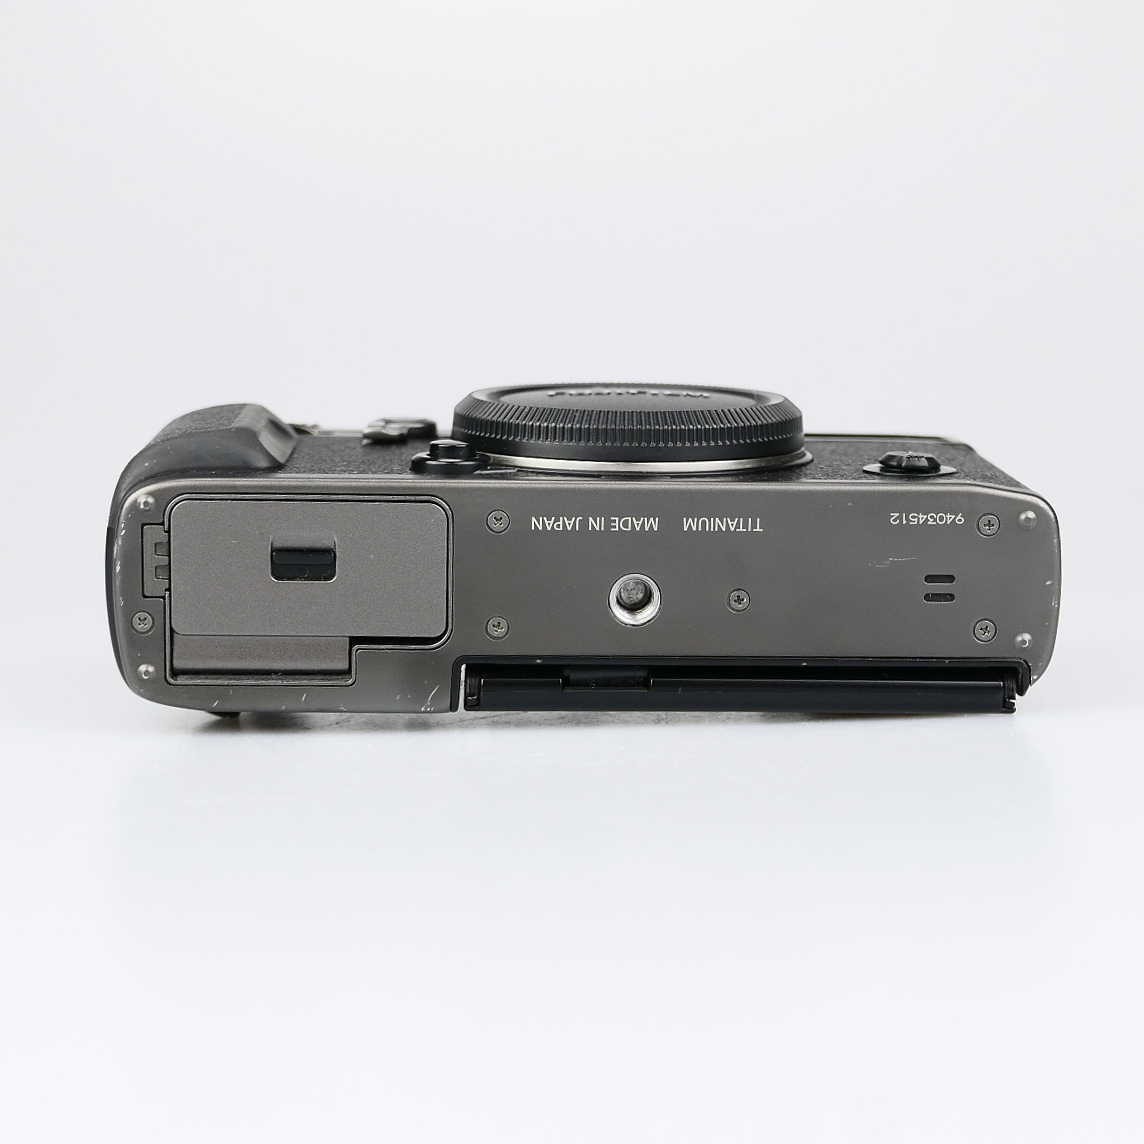 (Myyty) Fujifilm X-Pro3 -runko (Duratec Black) (SC 8170) (käytetty)